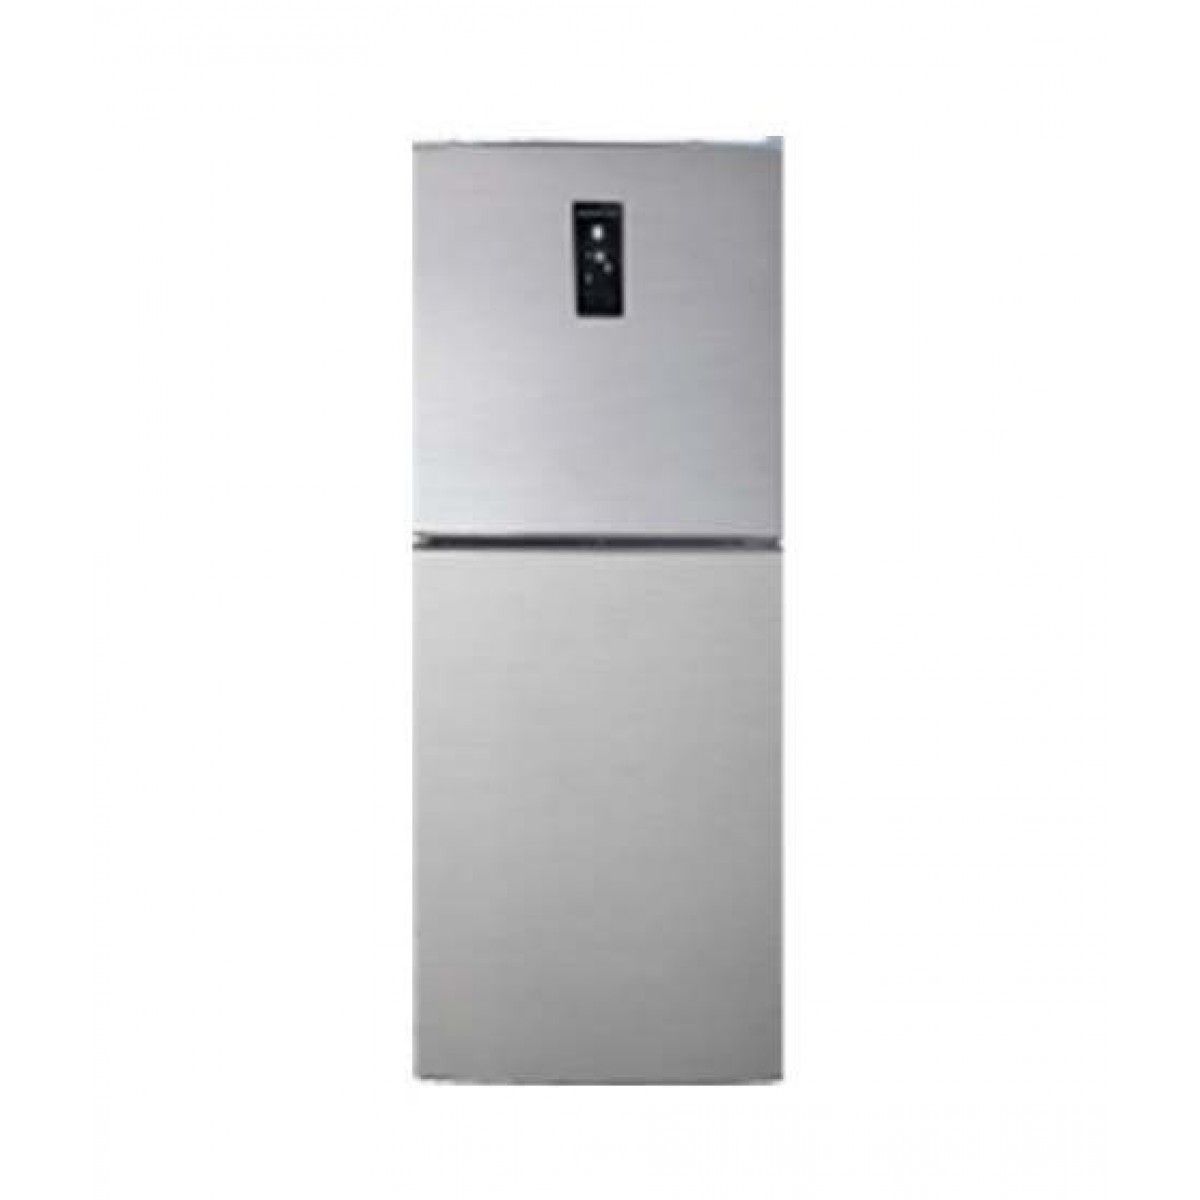 Changhong Ruba CHR-DD378SP 14 cu ft Double Door Direct Cool Smart DC Inverter Refrigerator